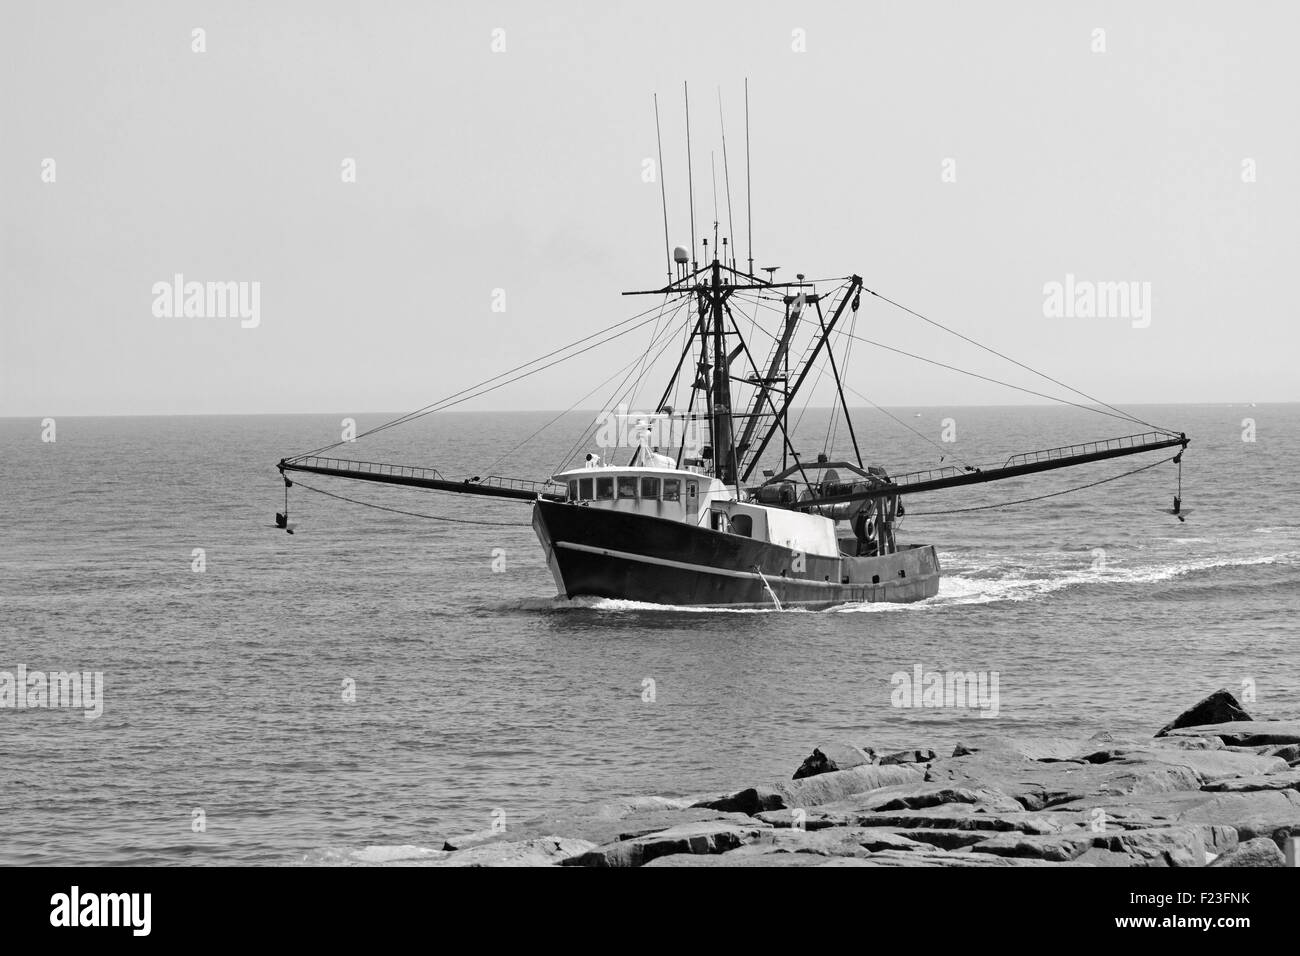 Trawler Black and White Stock Photos & Images - Alamy